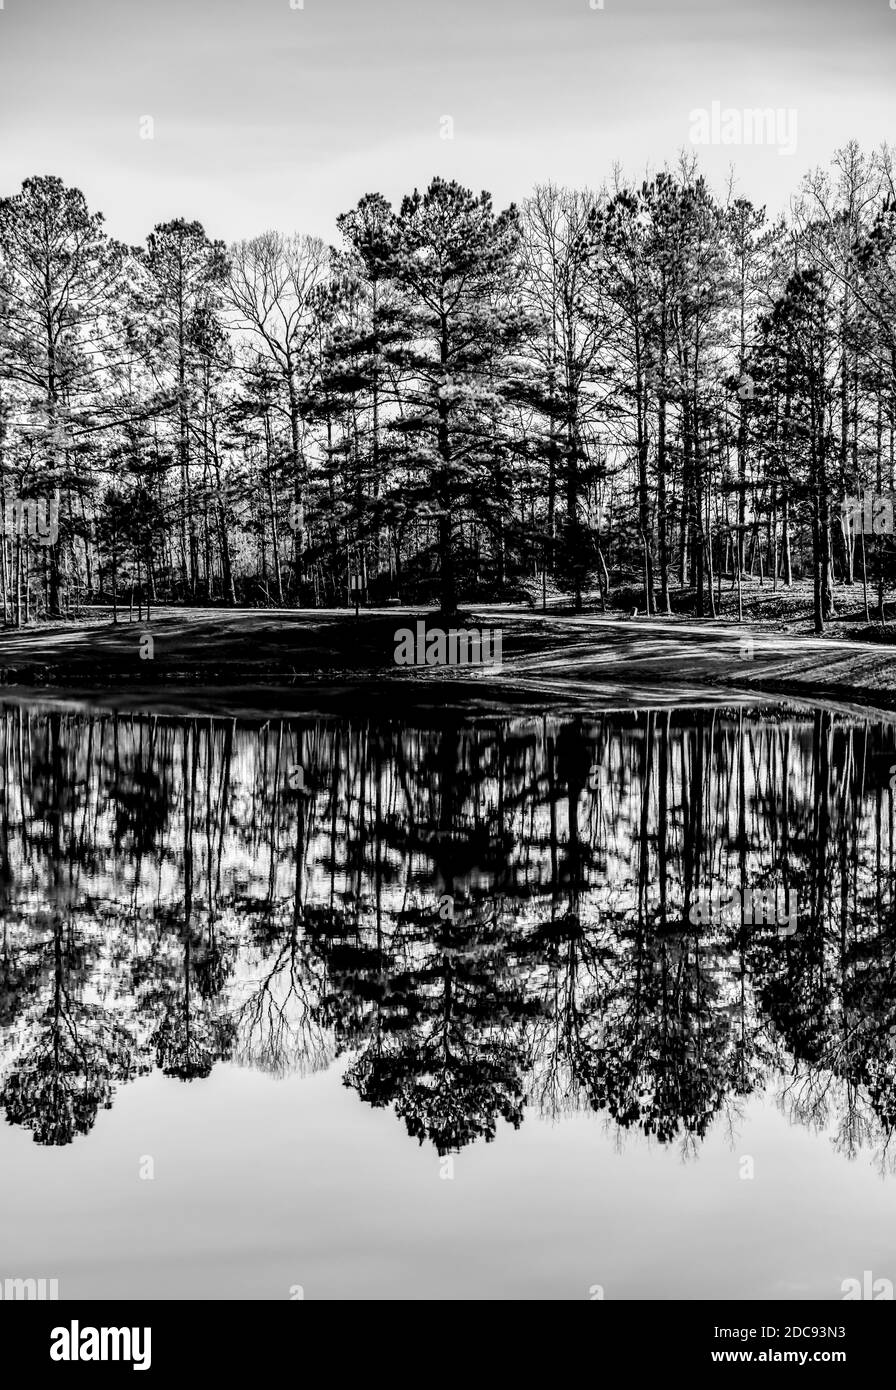 grands pins avec reflets miroir dans l'eau calme de l'étang Banque D'Images